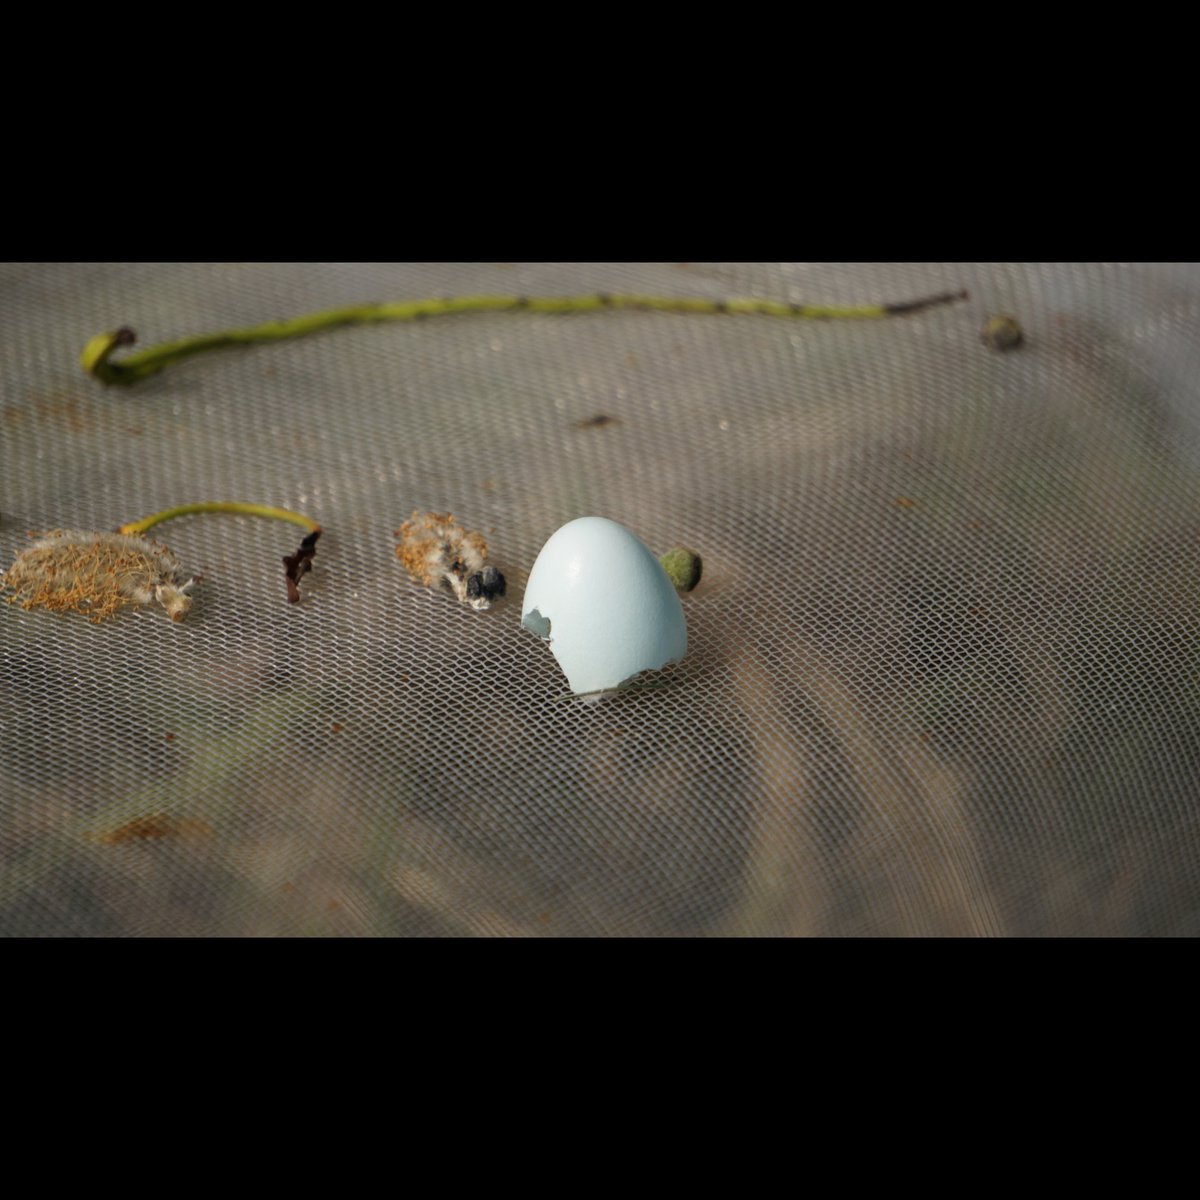 The remnants of a bird egg in Togher Community Garden, Cork, Ireland @GardenTogher #birds #birdphotography #sonyphotography #sonyalpha #sonya6000 #birdeggs #communitygardens #photooftheday #ireland #irishphotography #naturephotography #photography #photographicart